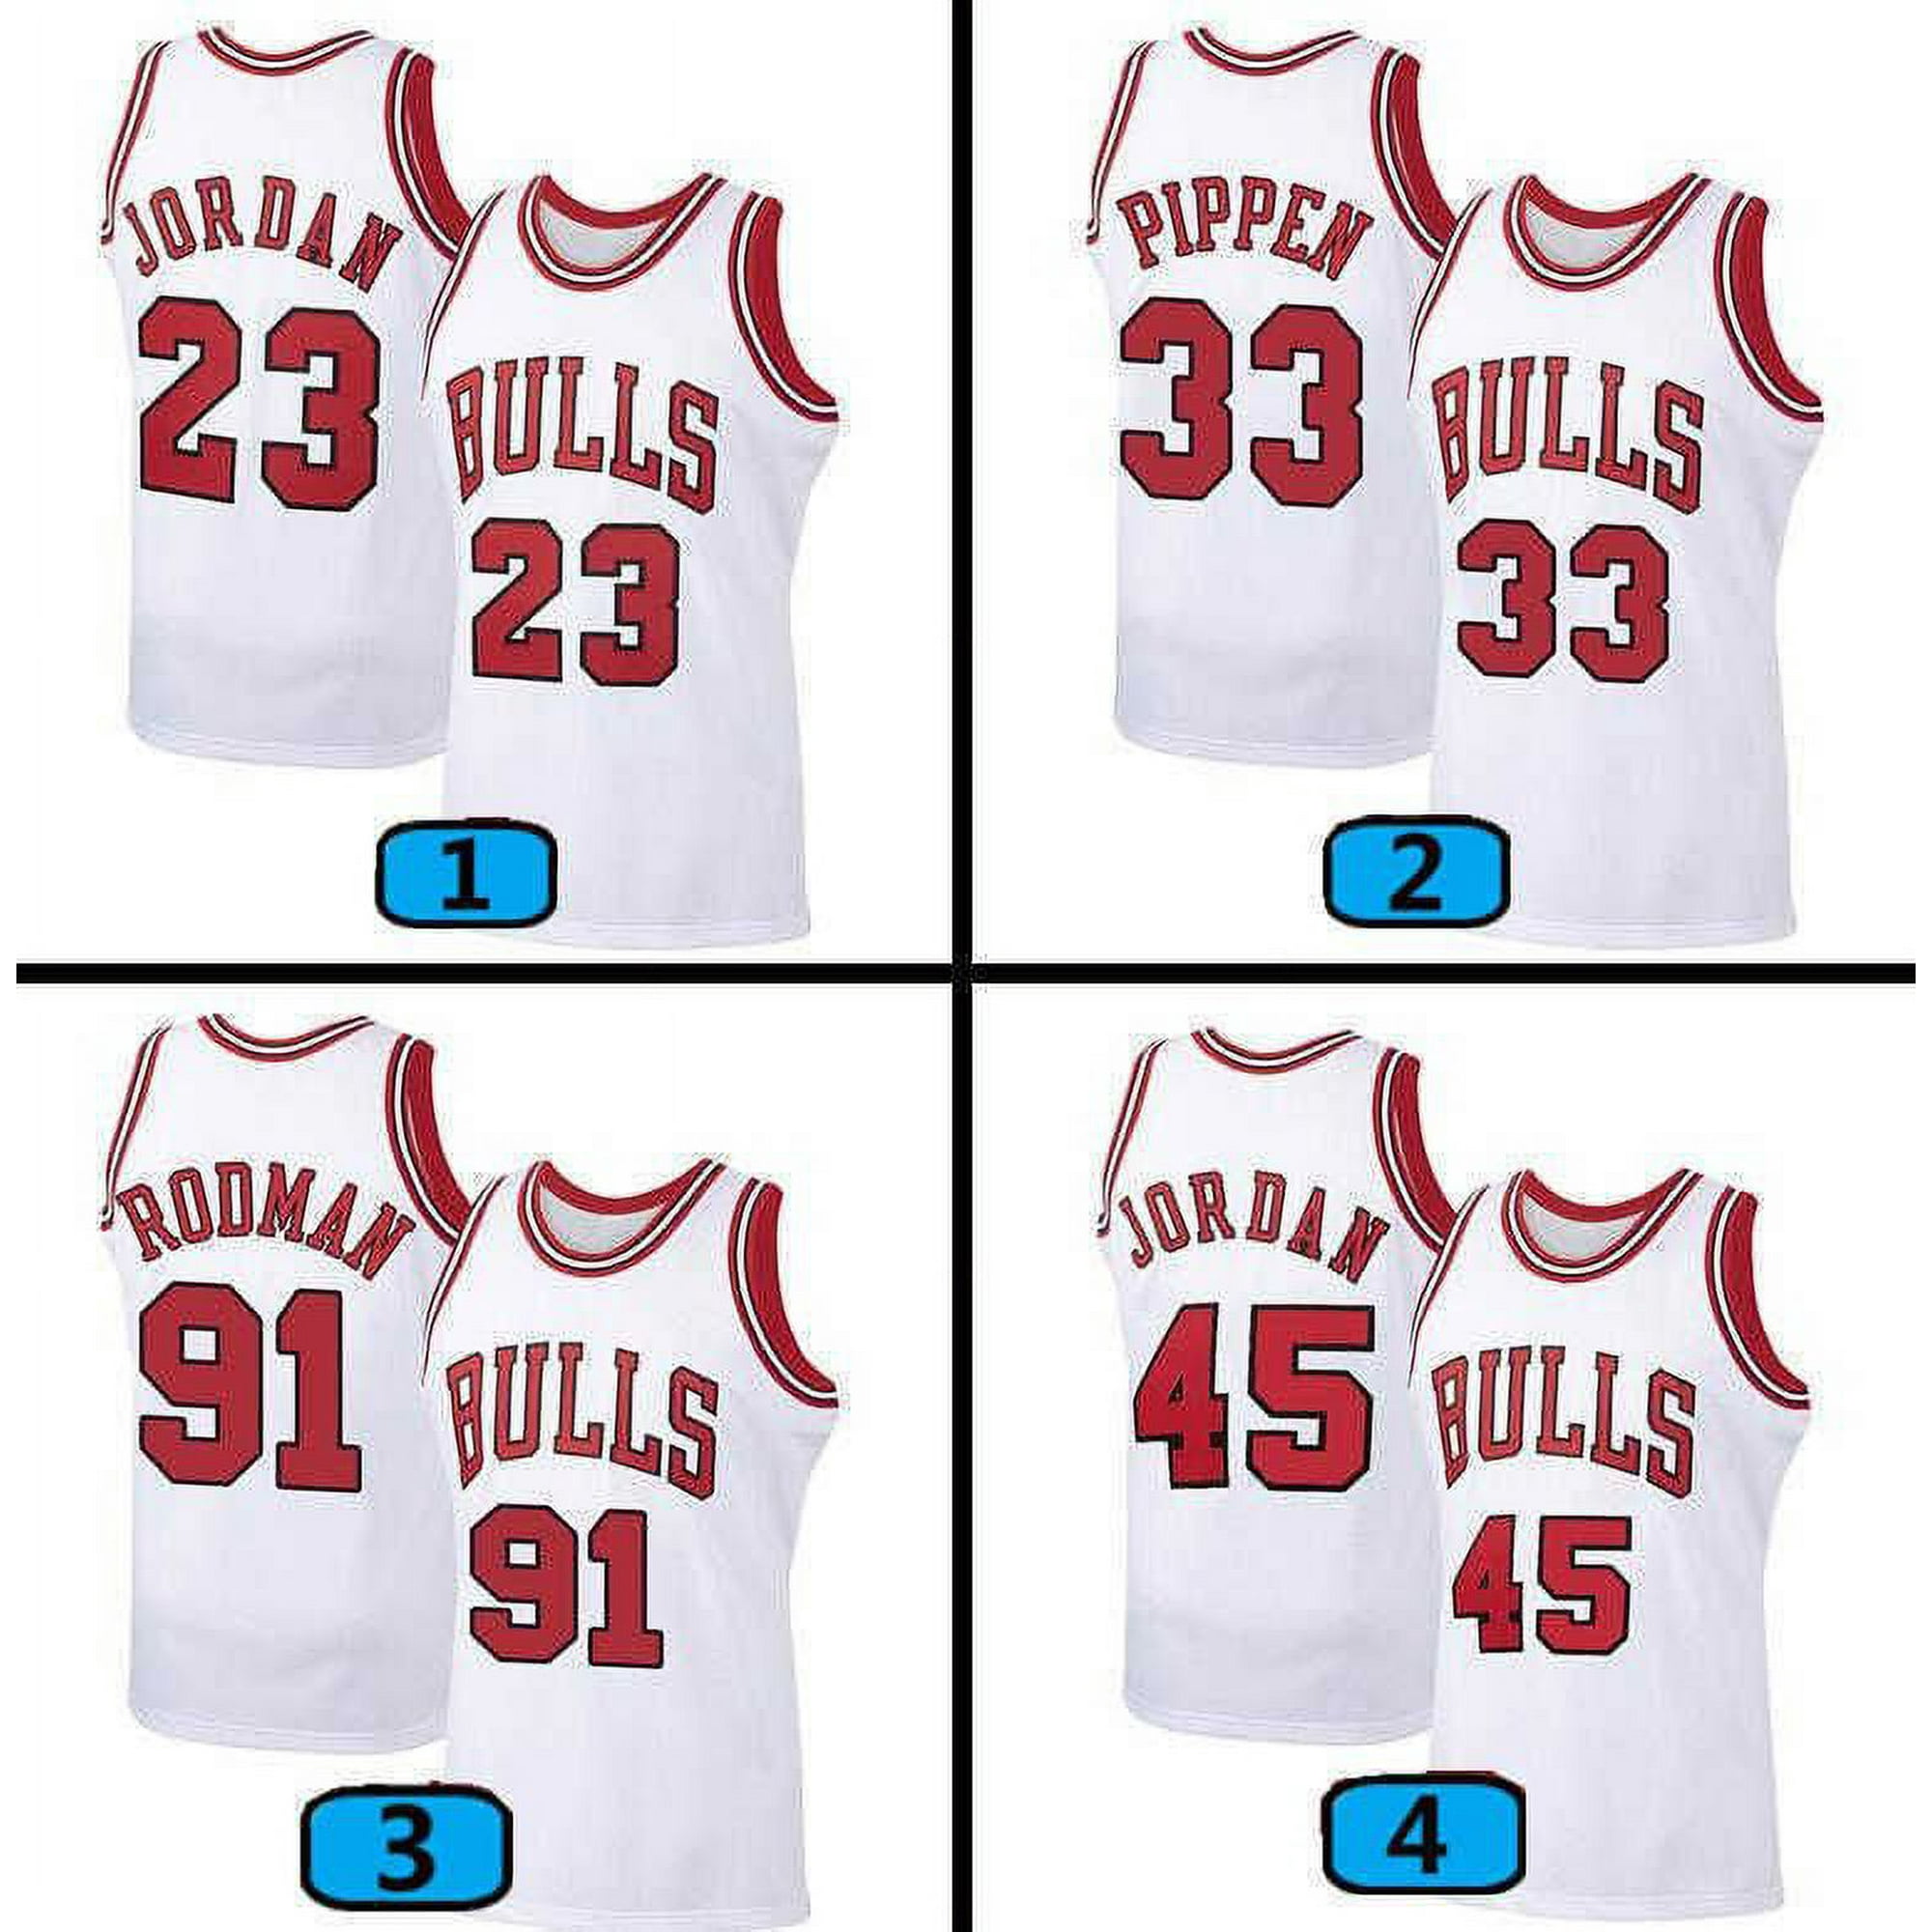 Lonzo Ball Jersey - NBA Chicago Bulls Lonzo Ball Jerseys - Bulls Store